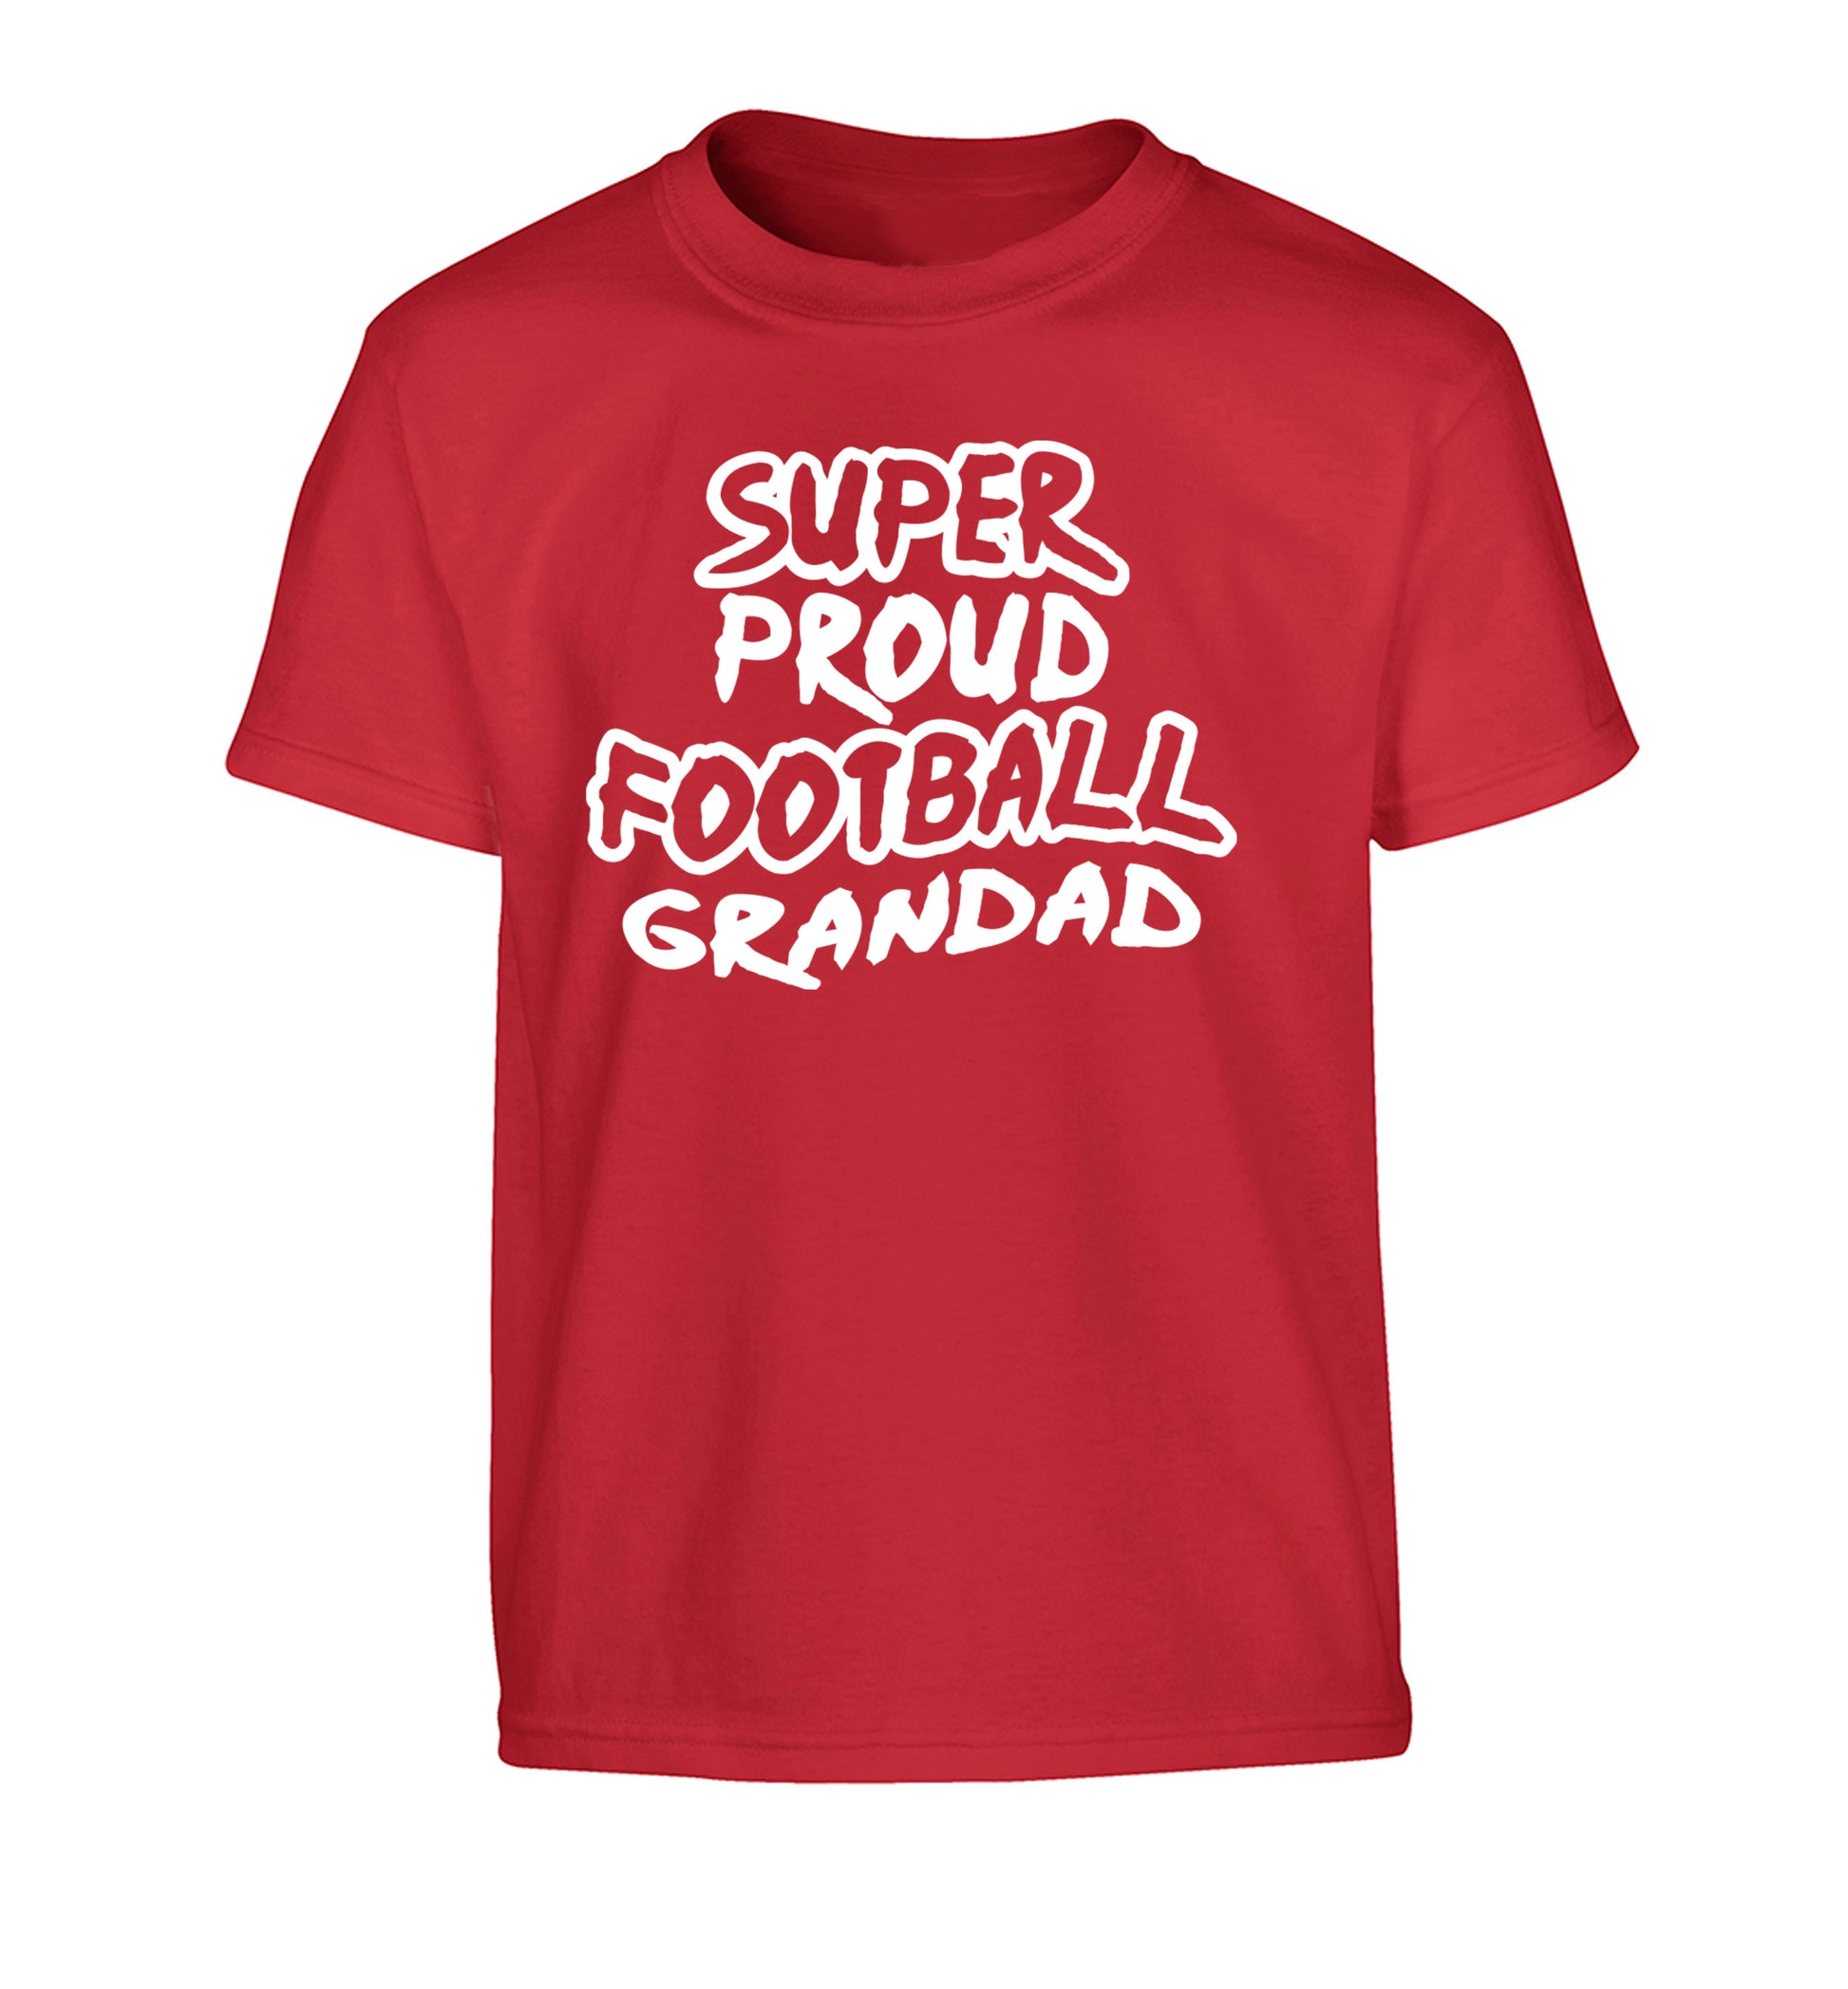 Super proud football grandad Children's red Tshirt 12-14 Years